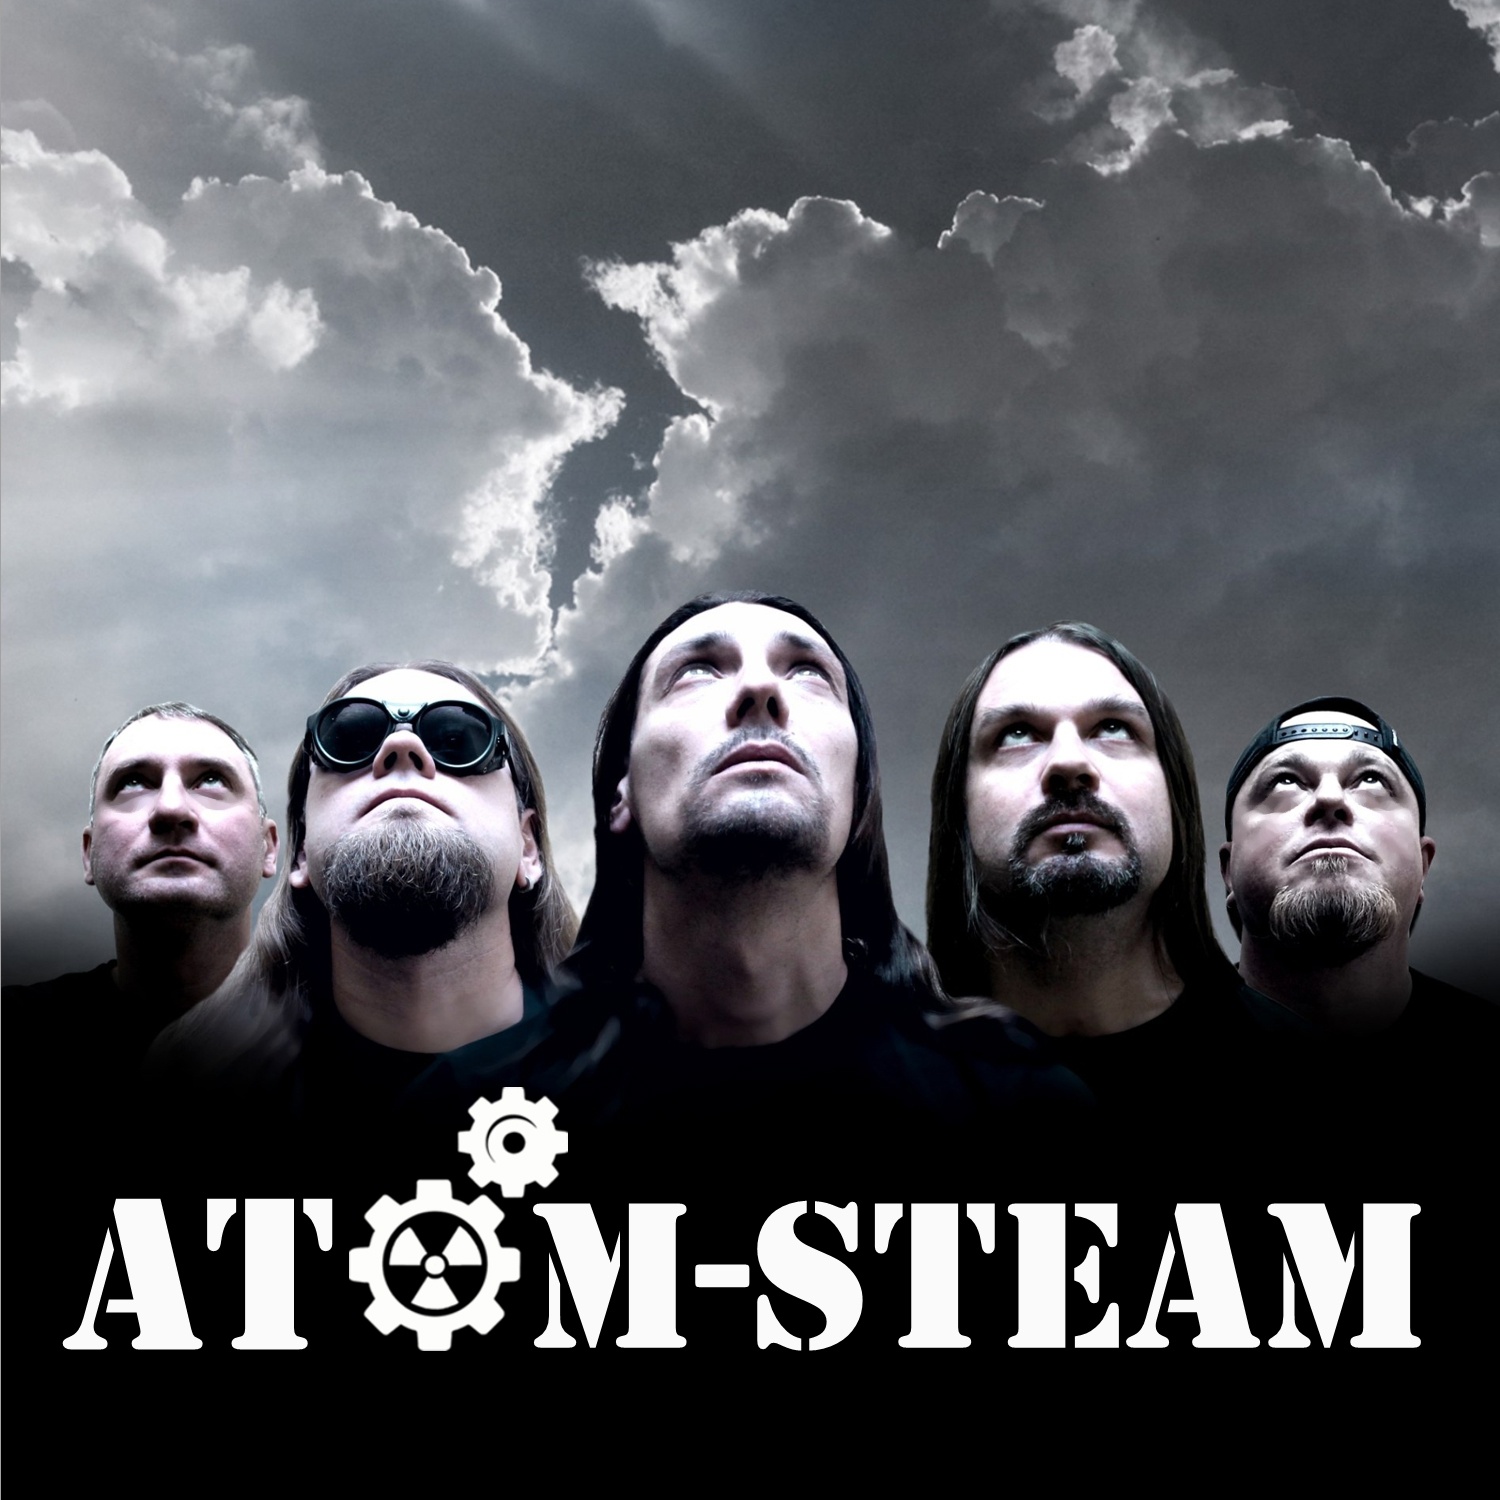 Atom steam музыка фото 1